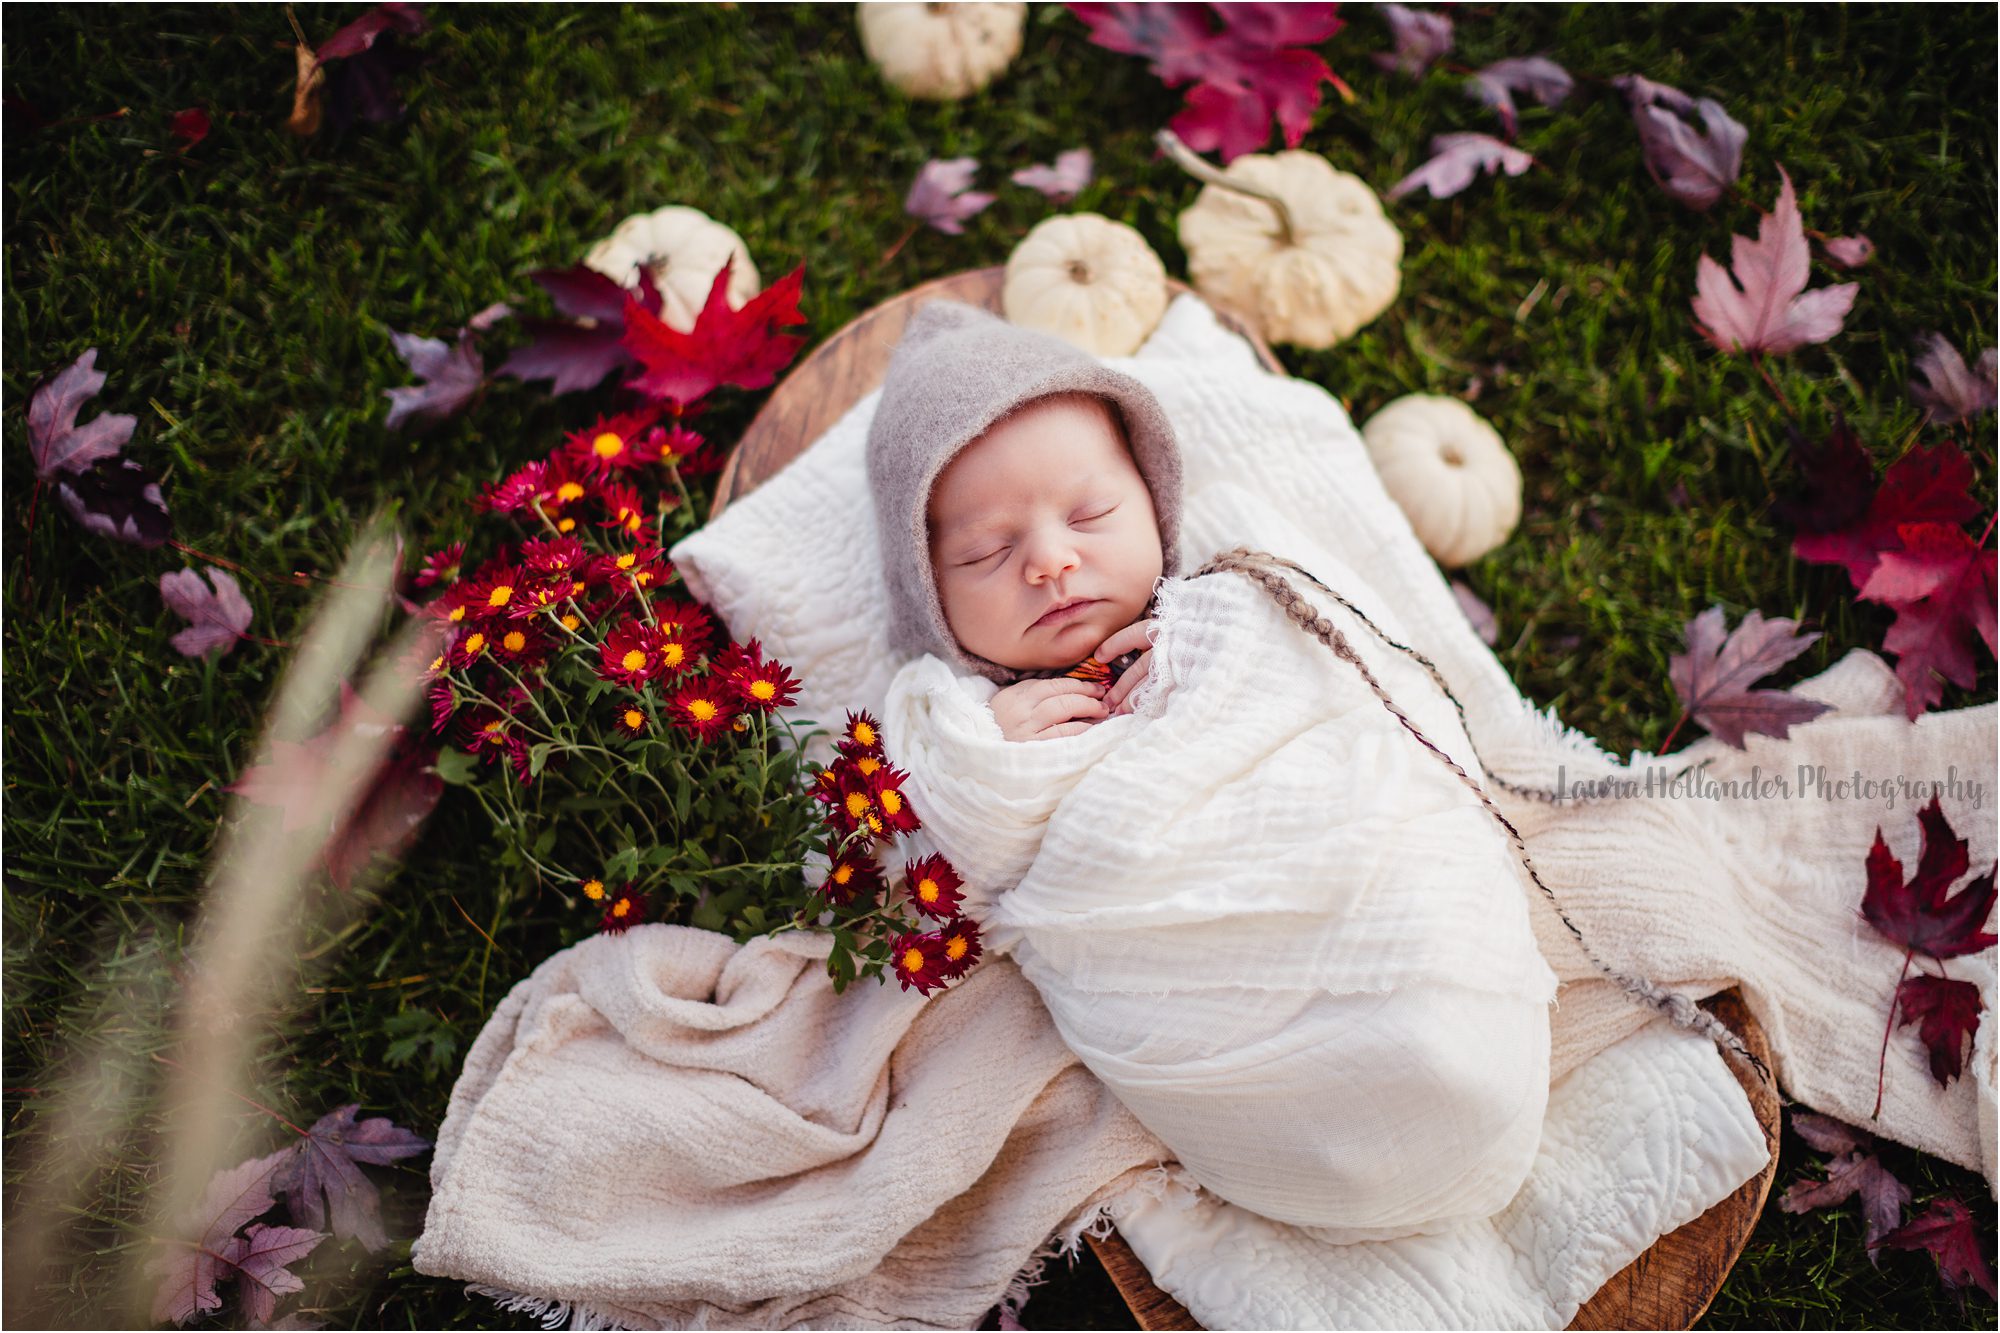 lifestyle newborn photography grand rapids, outdoor newborn photography, Laura Hollander Photography